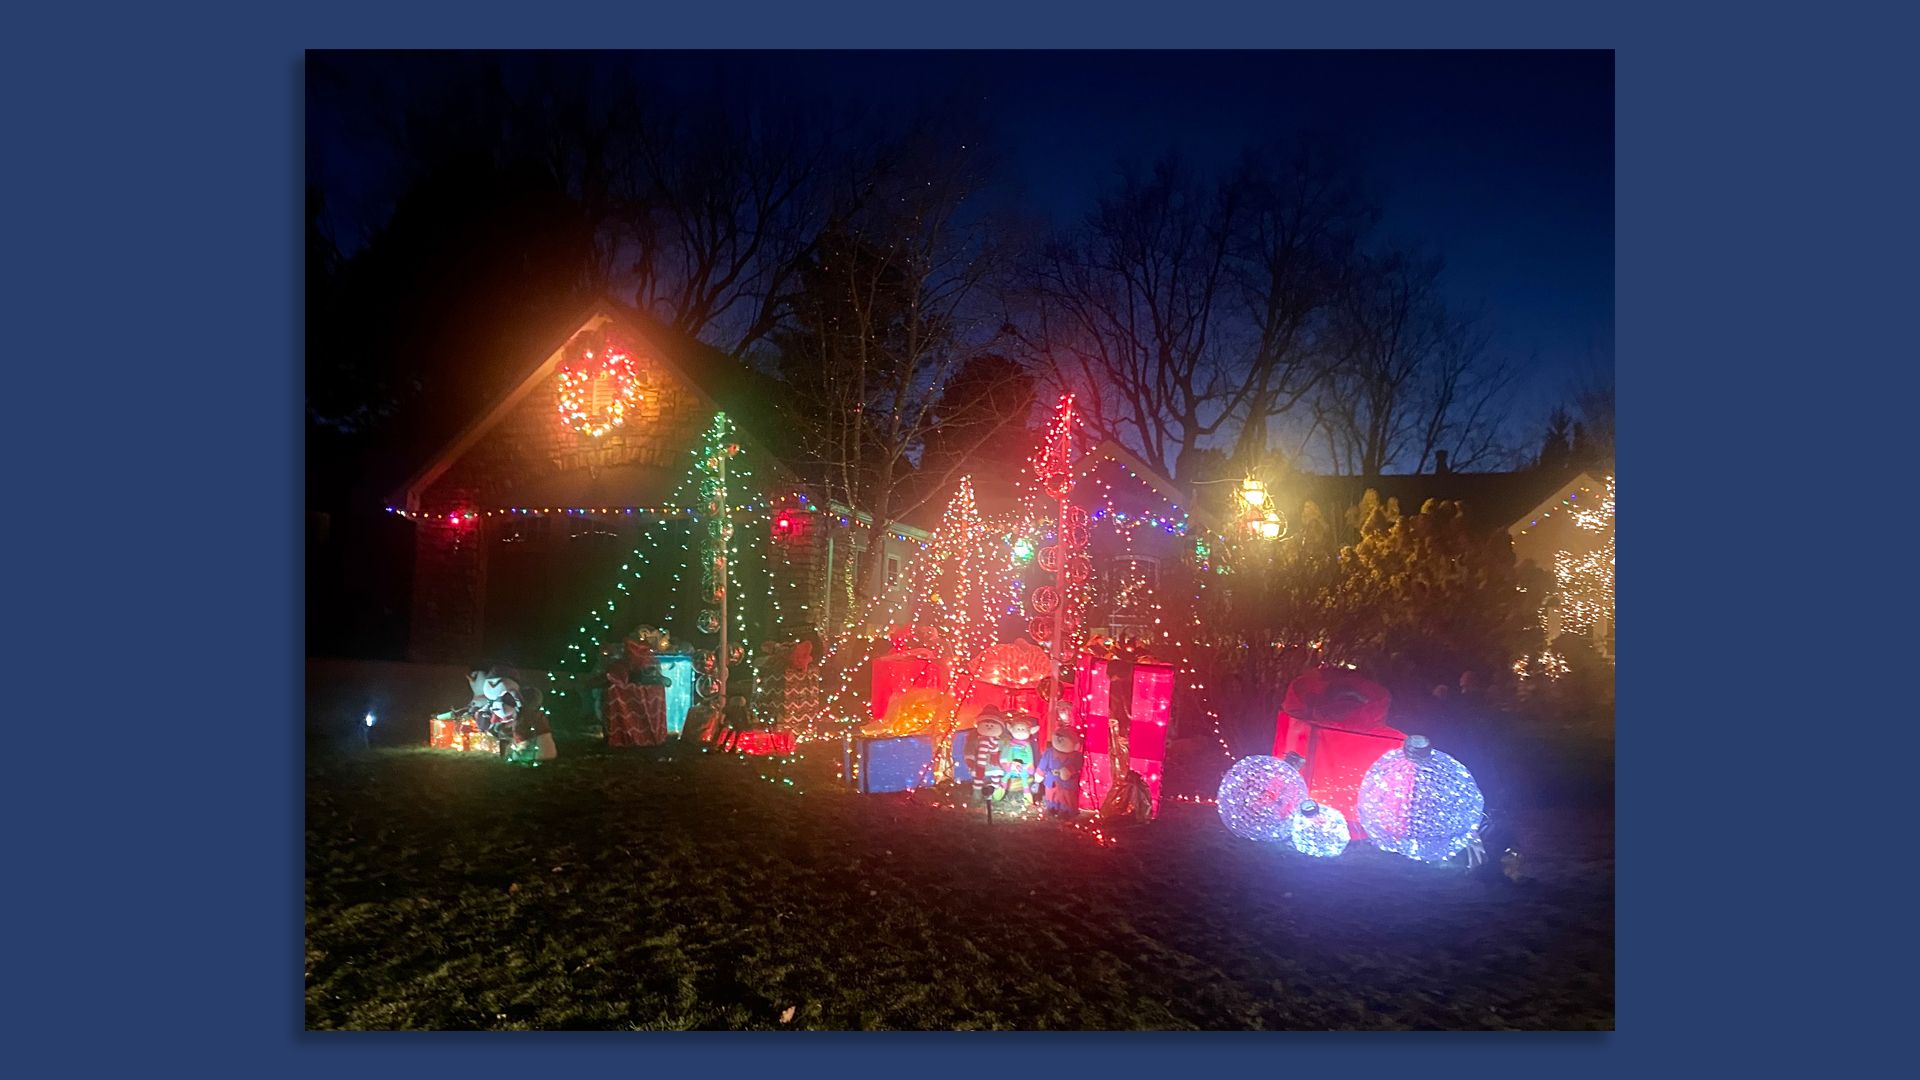 Denver's Hale neighborhood with Christmas lights 